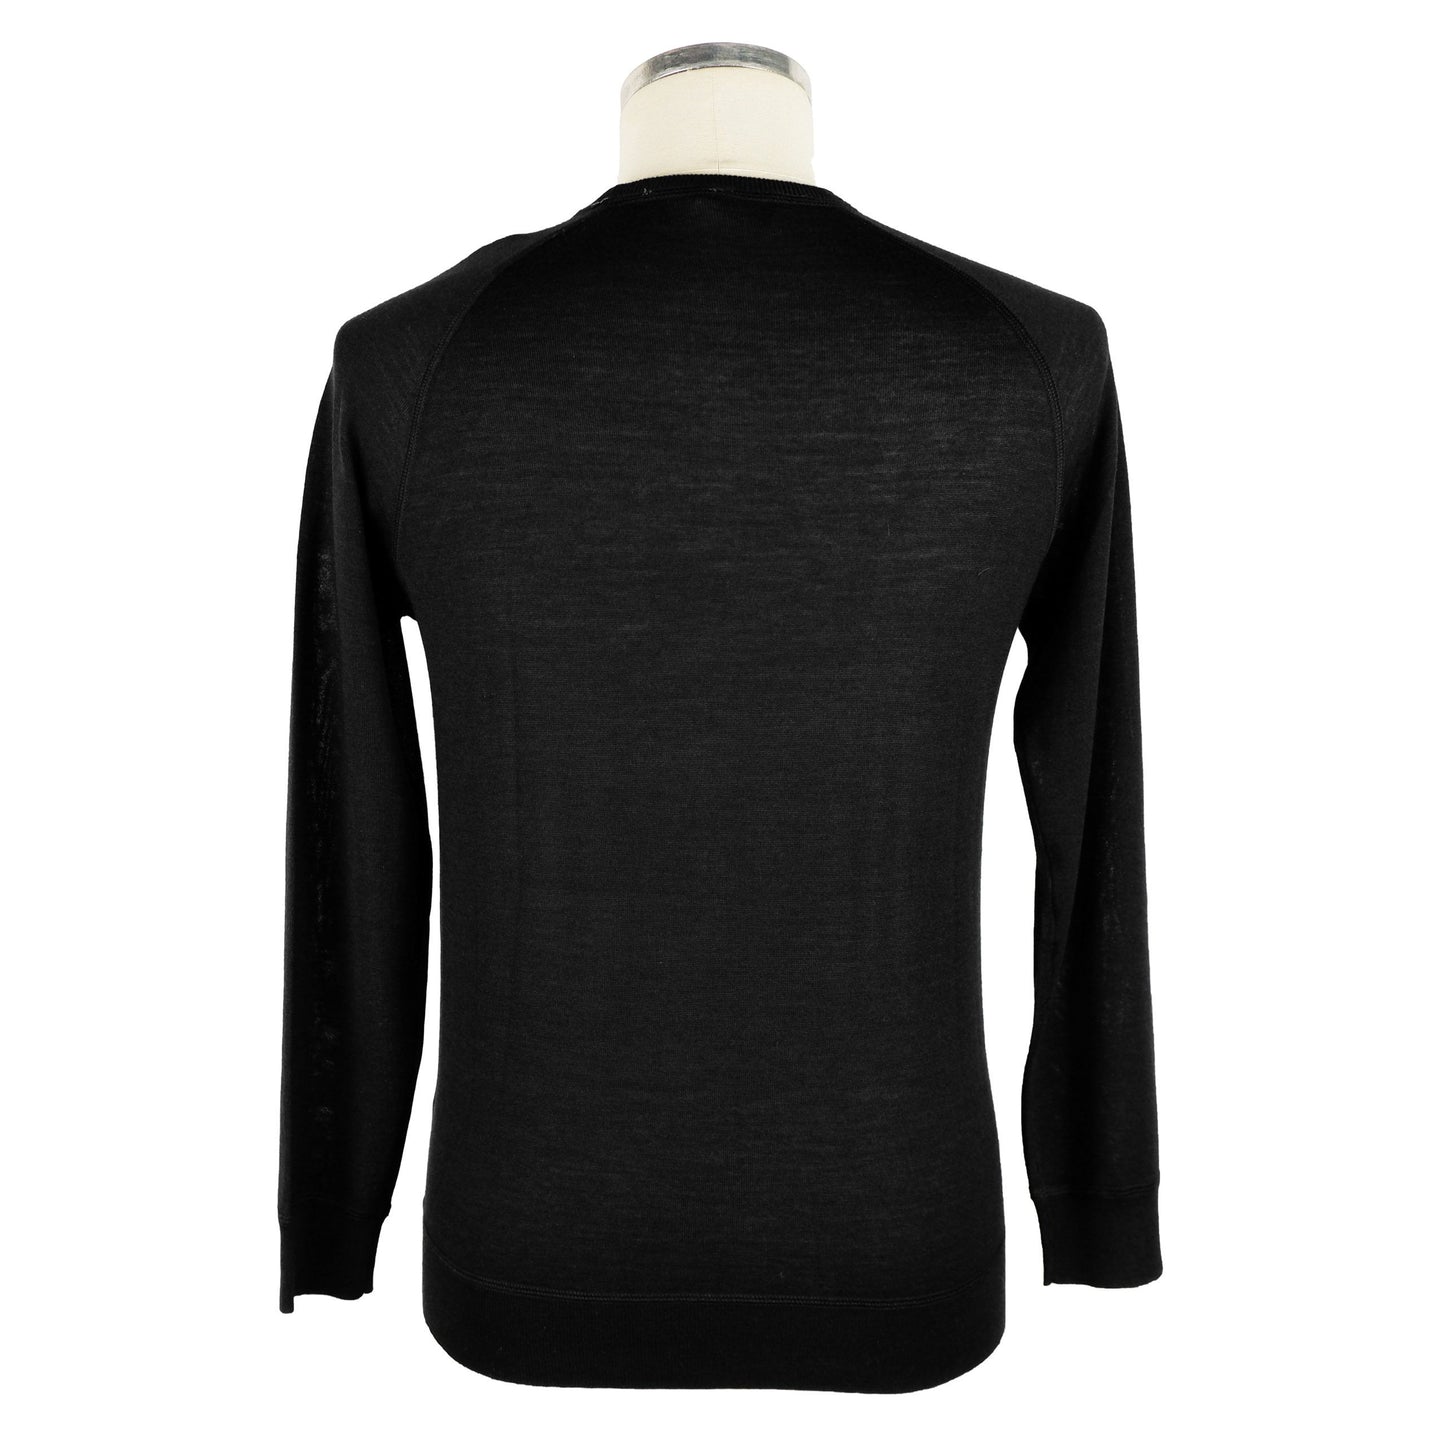 Emilio Romanelli Black Wool Merino Sweater